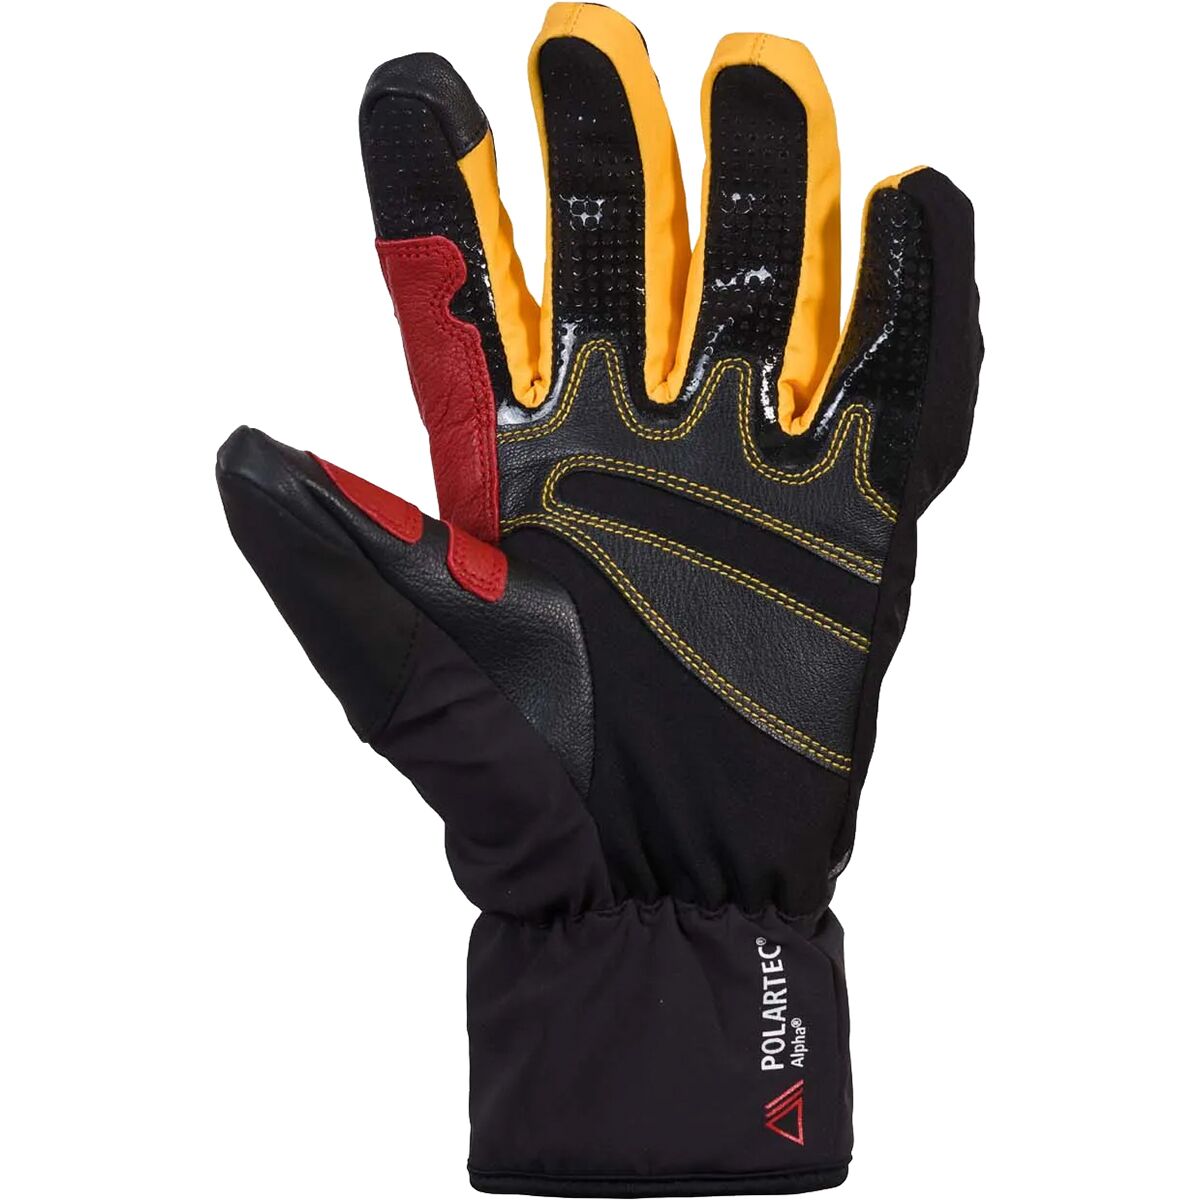  La Sportiva Skimo Evo Glove - Accessories